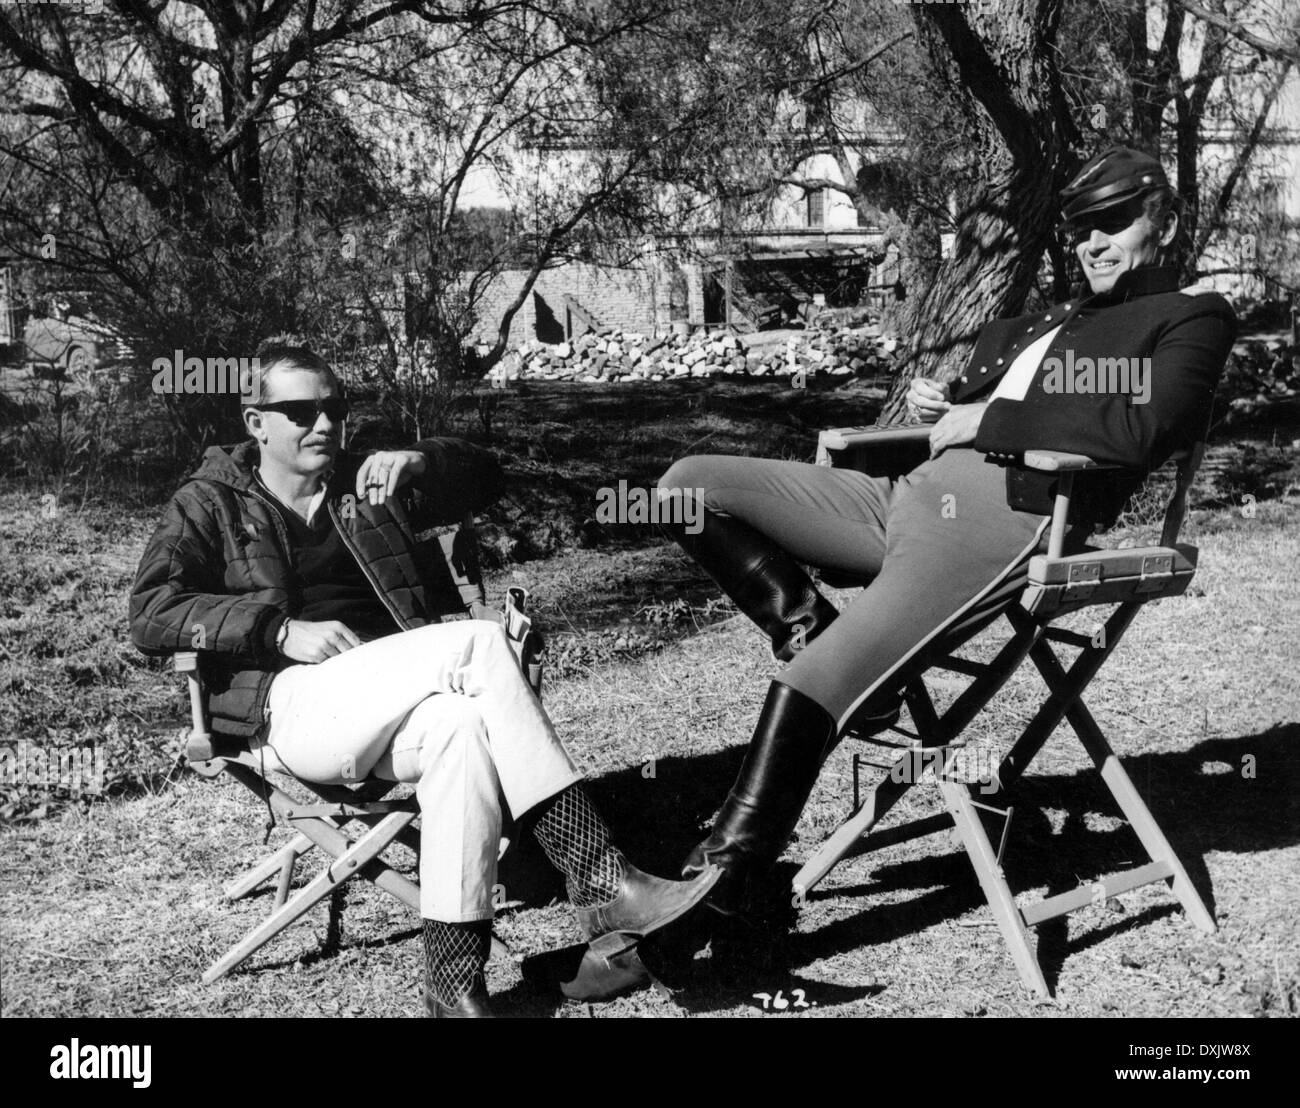 Peckinpah Black and White Stock Photos & Images - Alamy